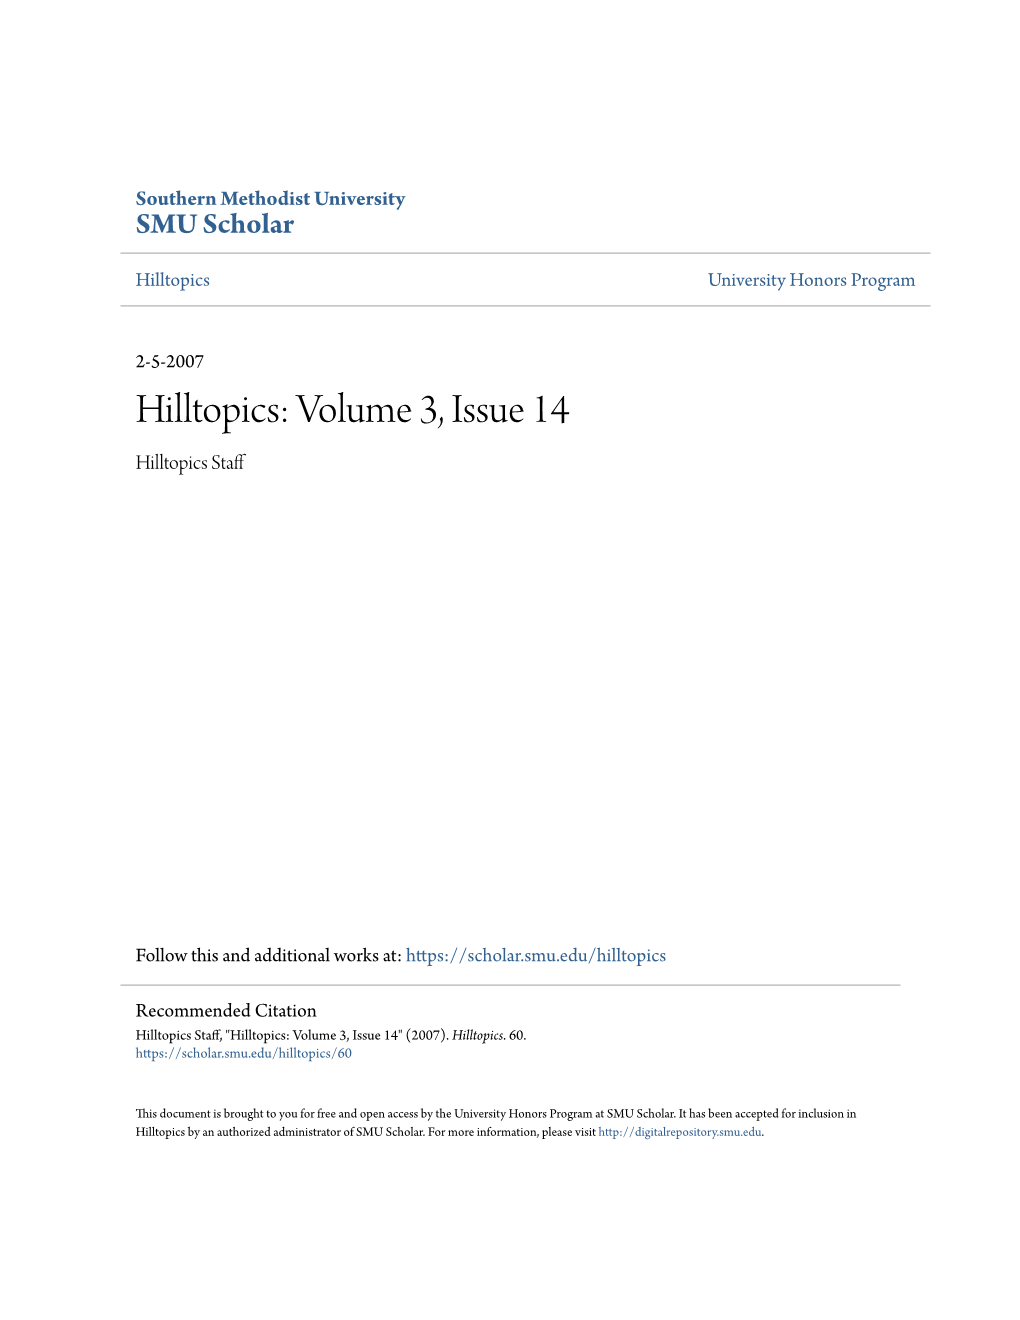 Hilltopics: Volume 3, Issue 14 Hilltopics Staff